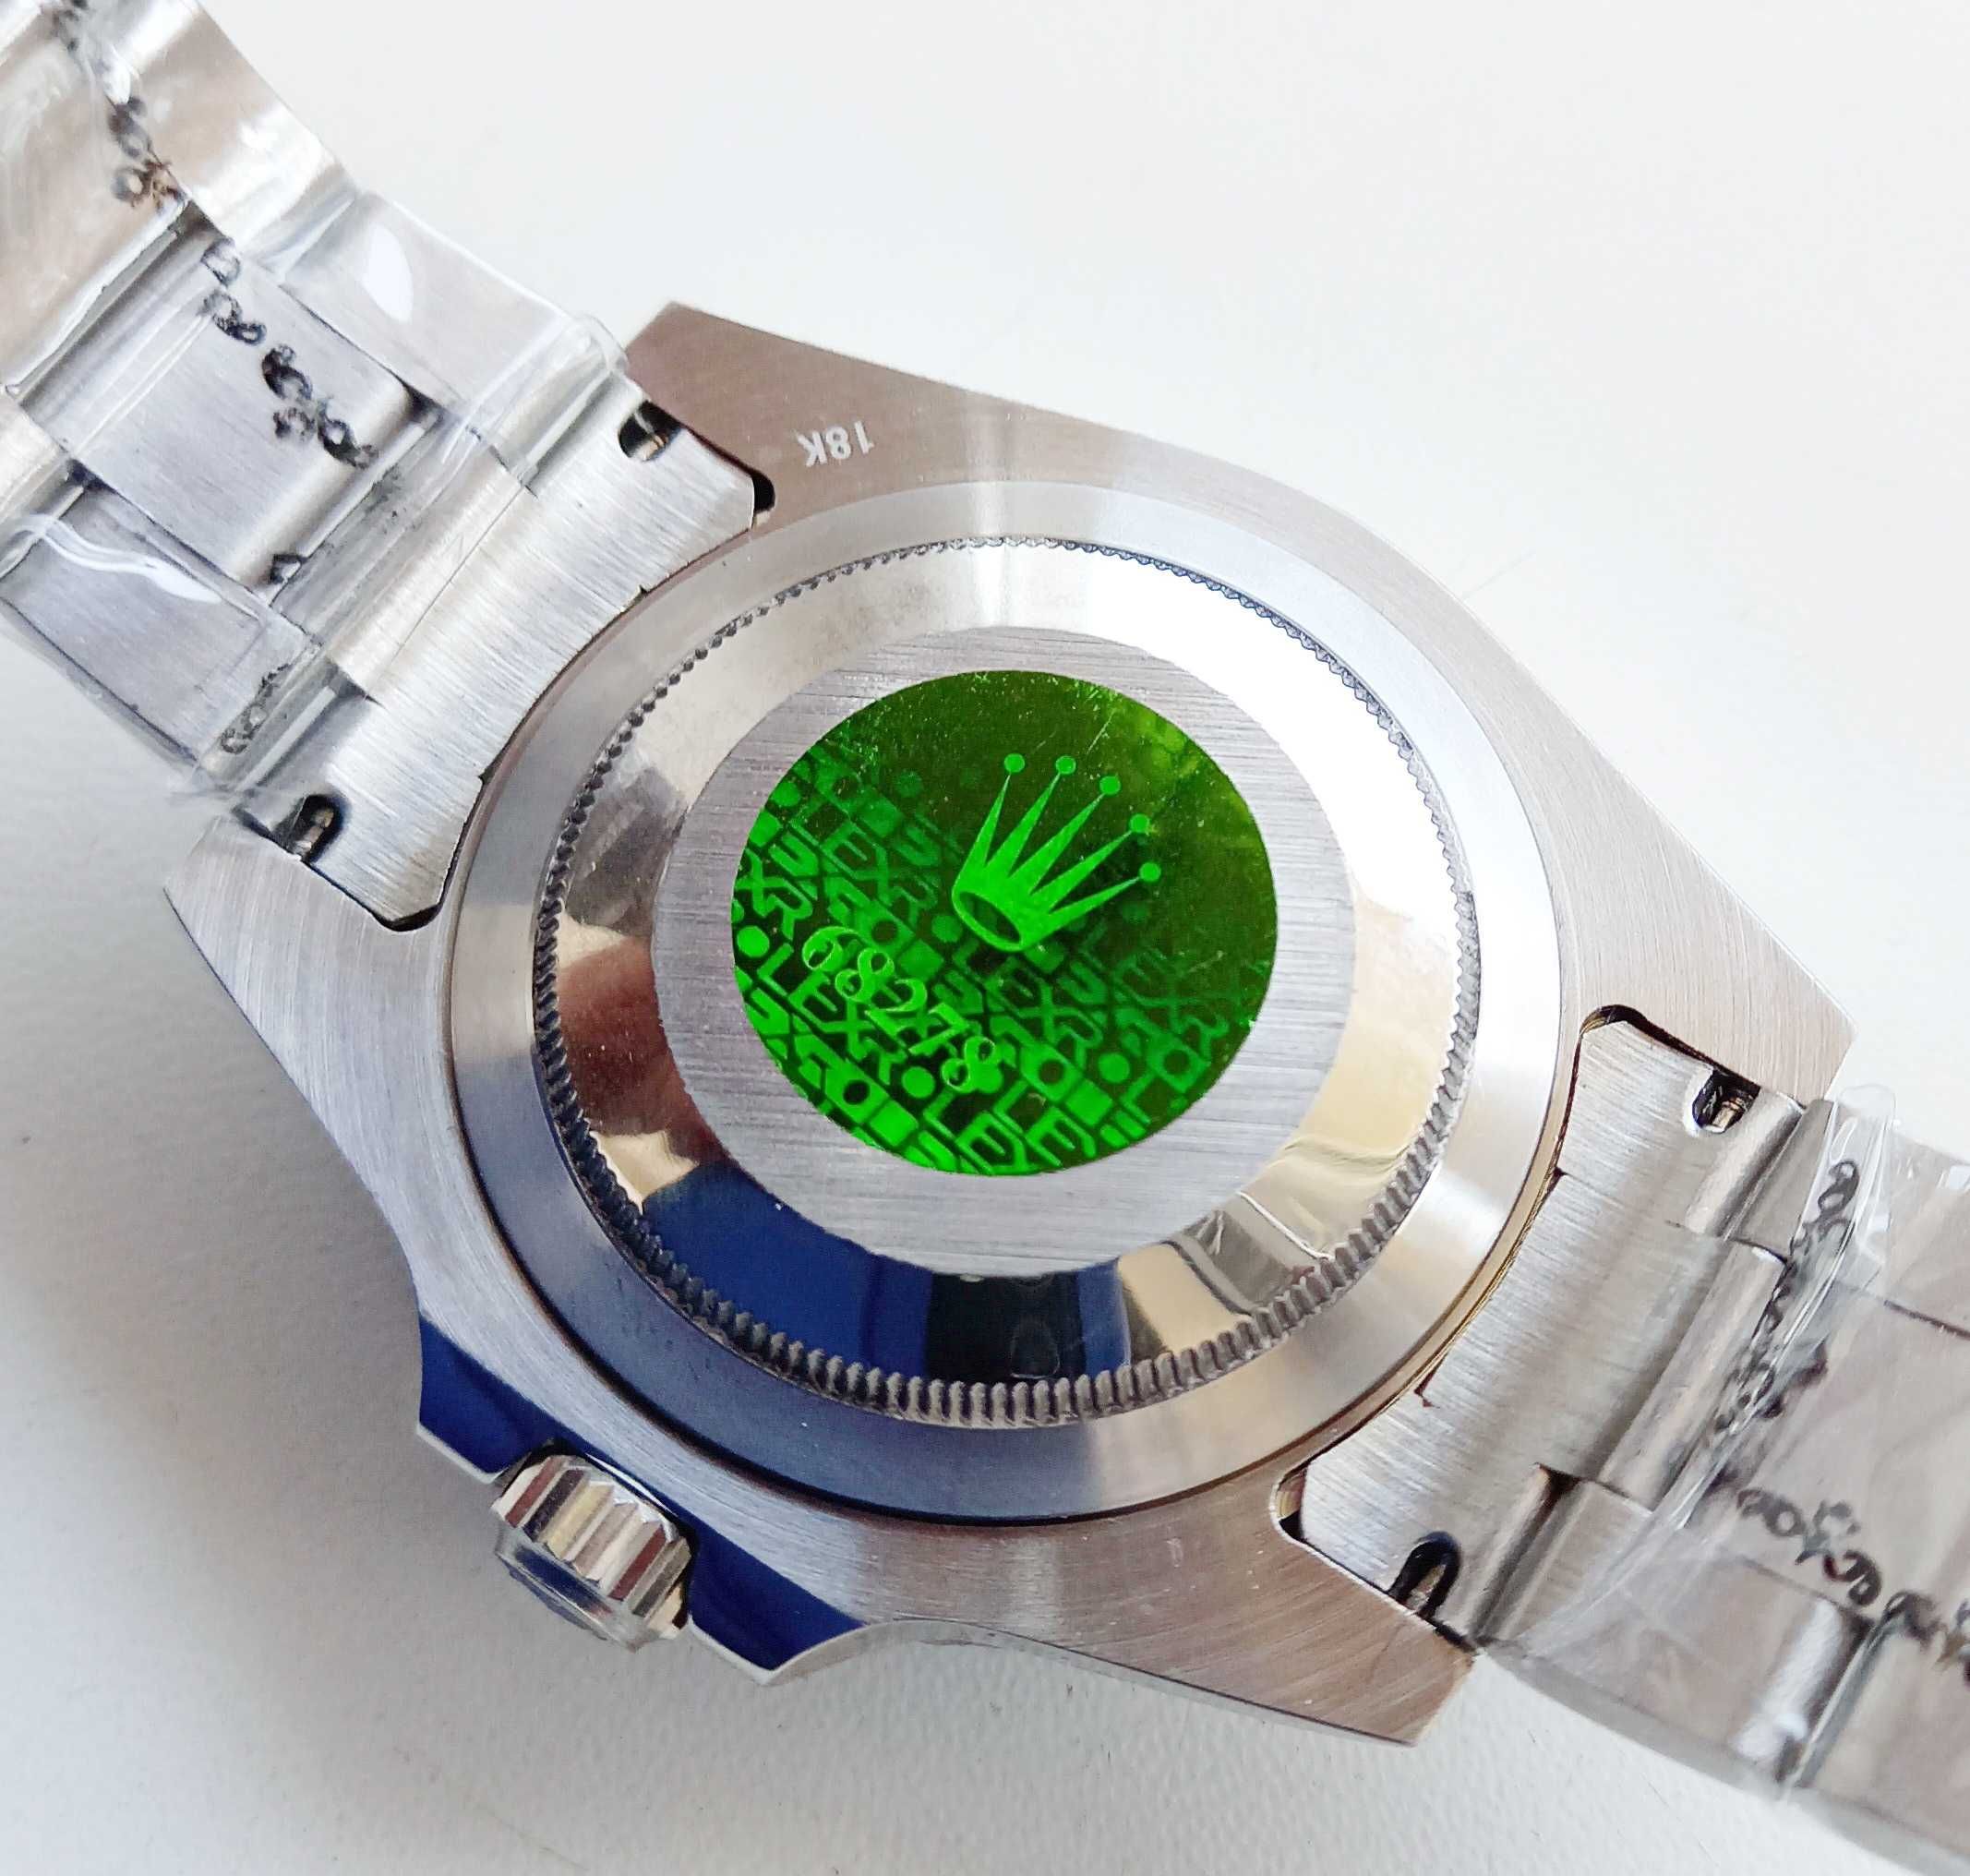 Часы Rolex GMT batman класс ААА